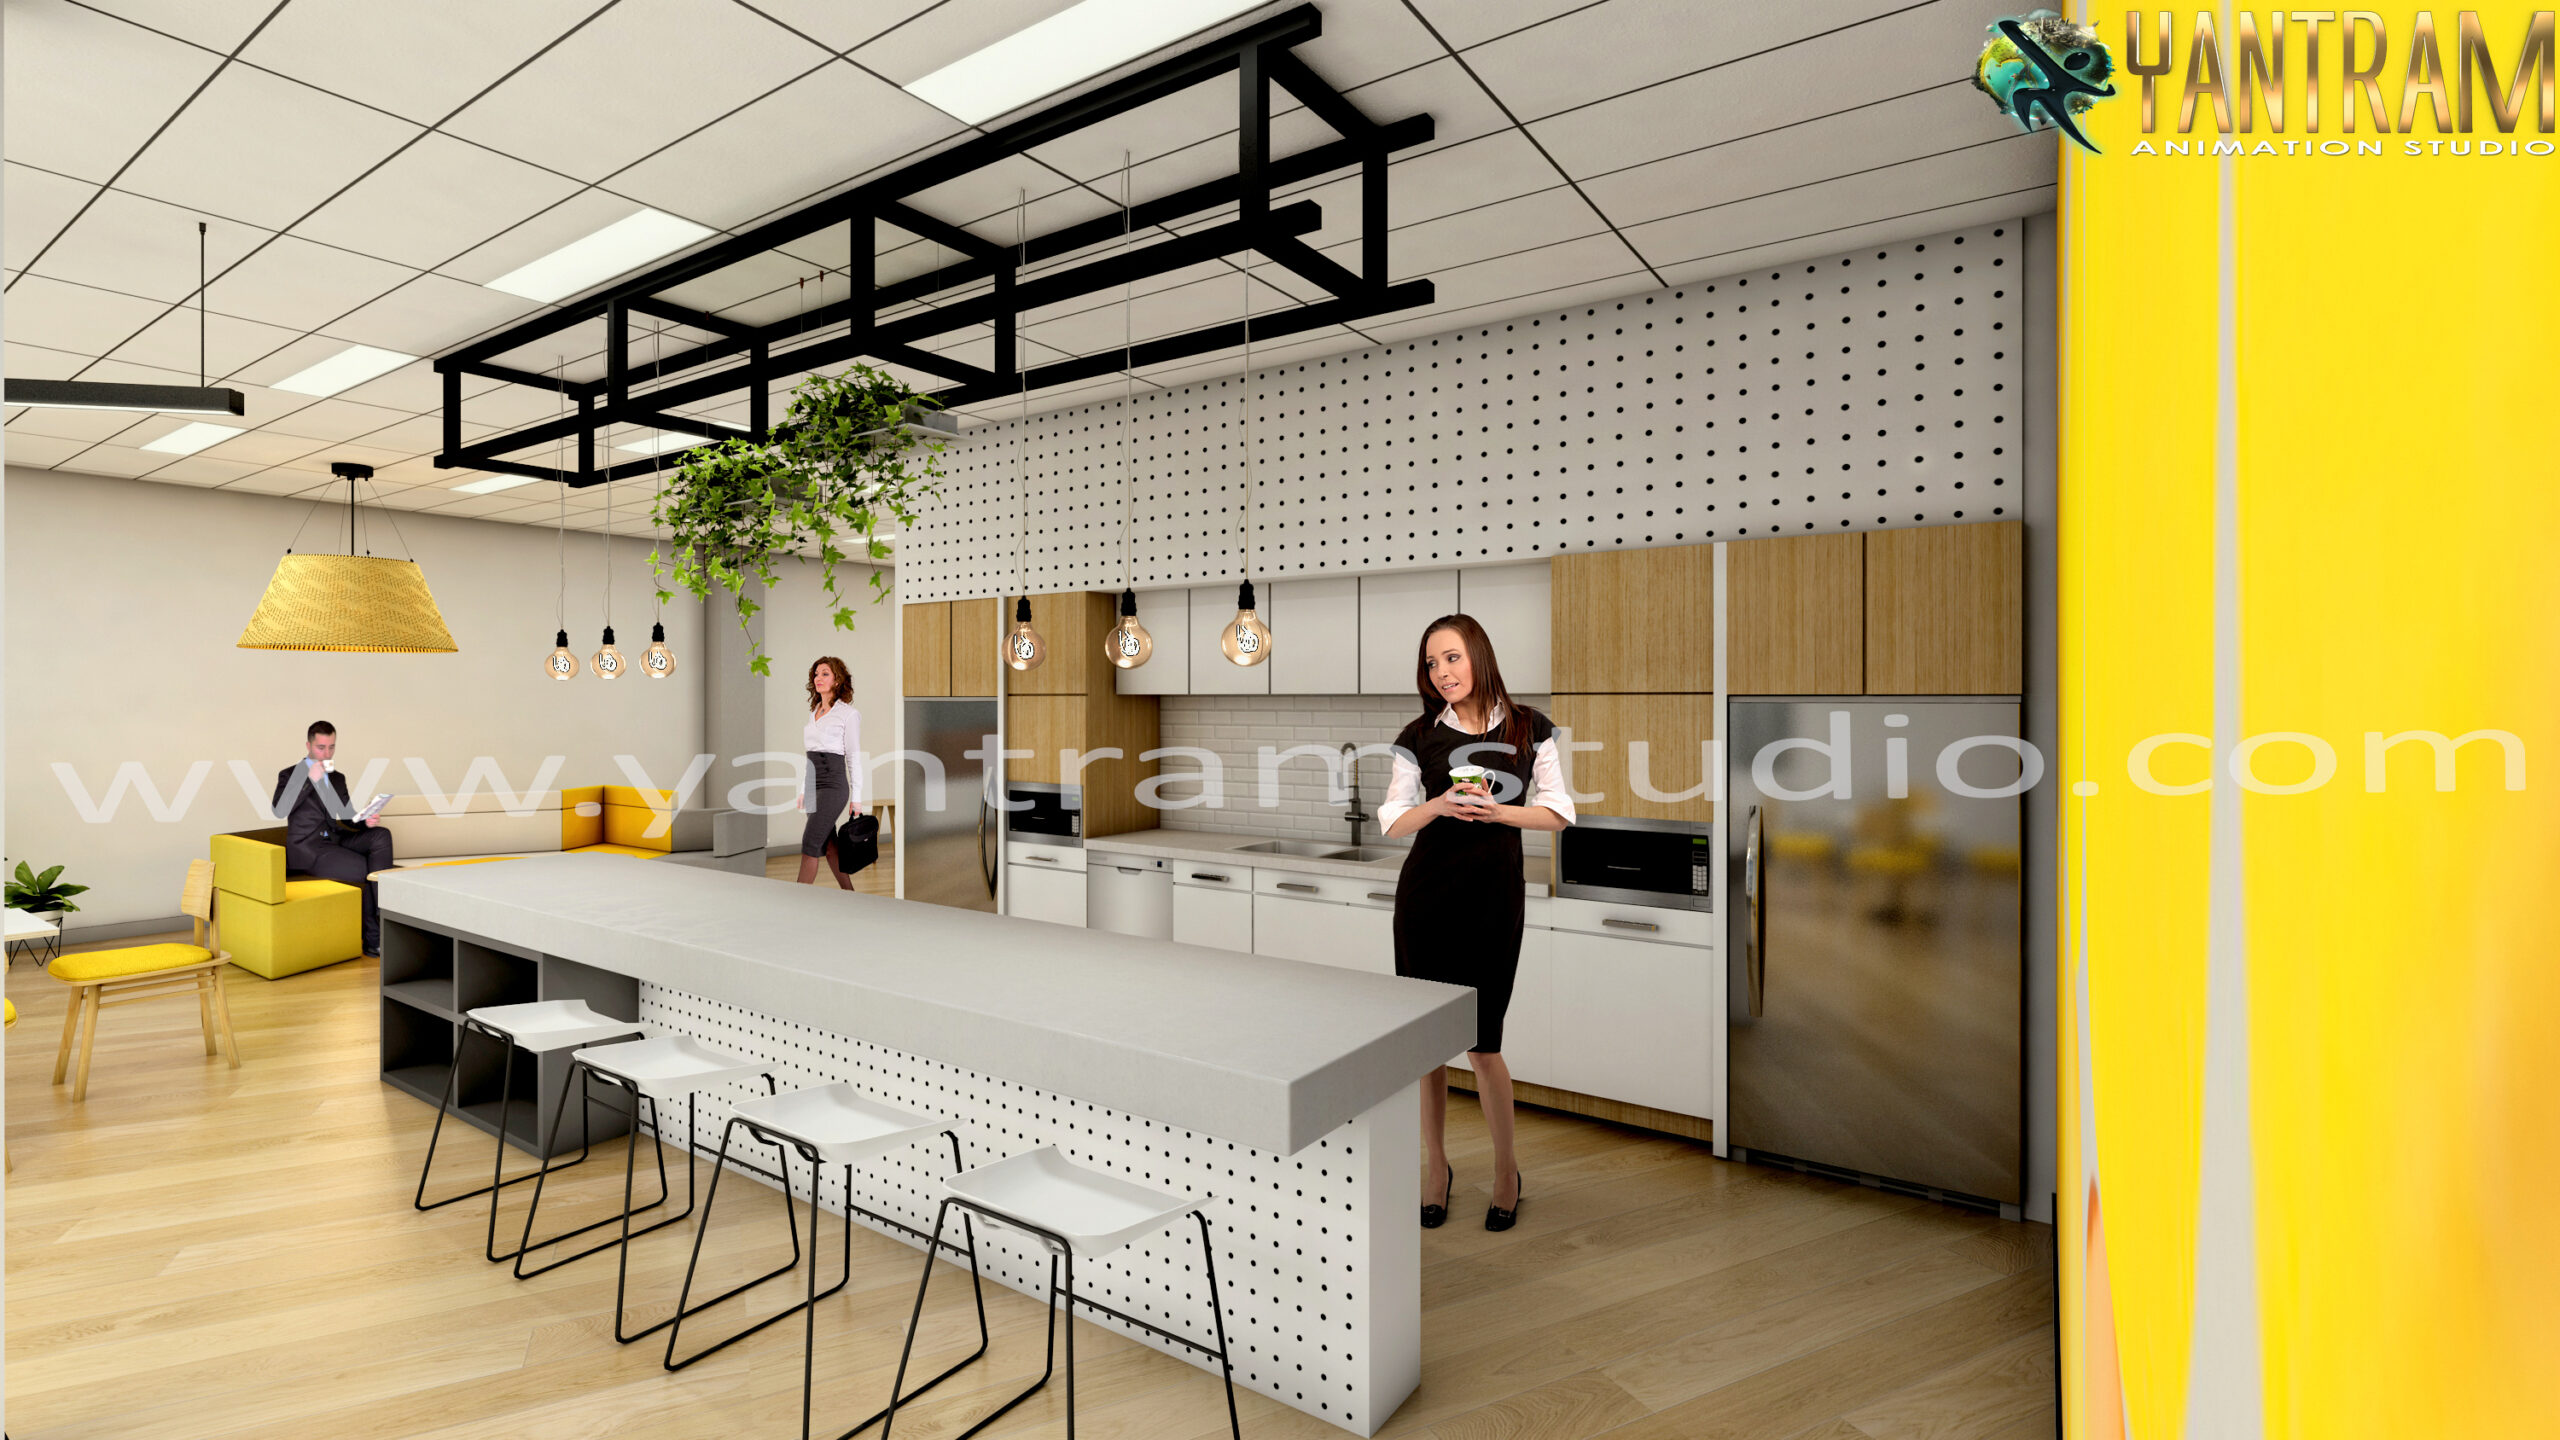 Gorgeous Best cafeteria design 3D interior designer by Yantram architectural visualisation Studio- Houston, Texas